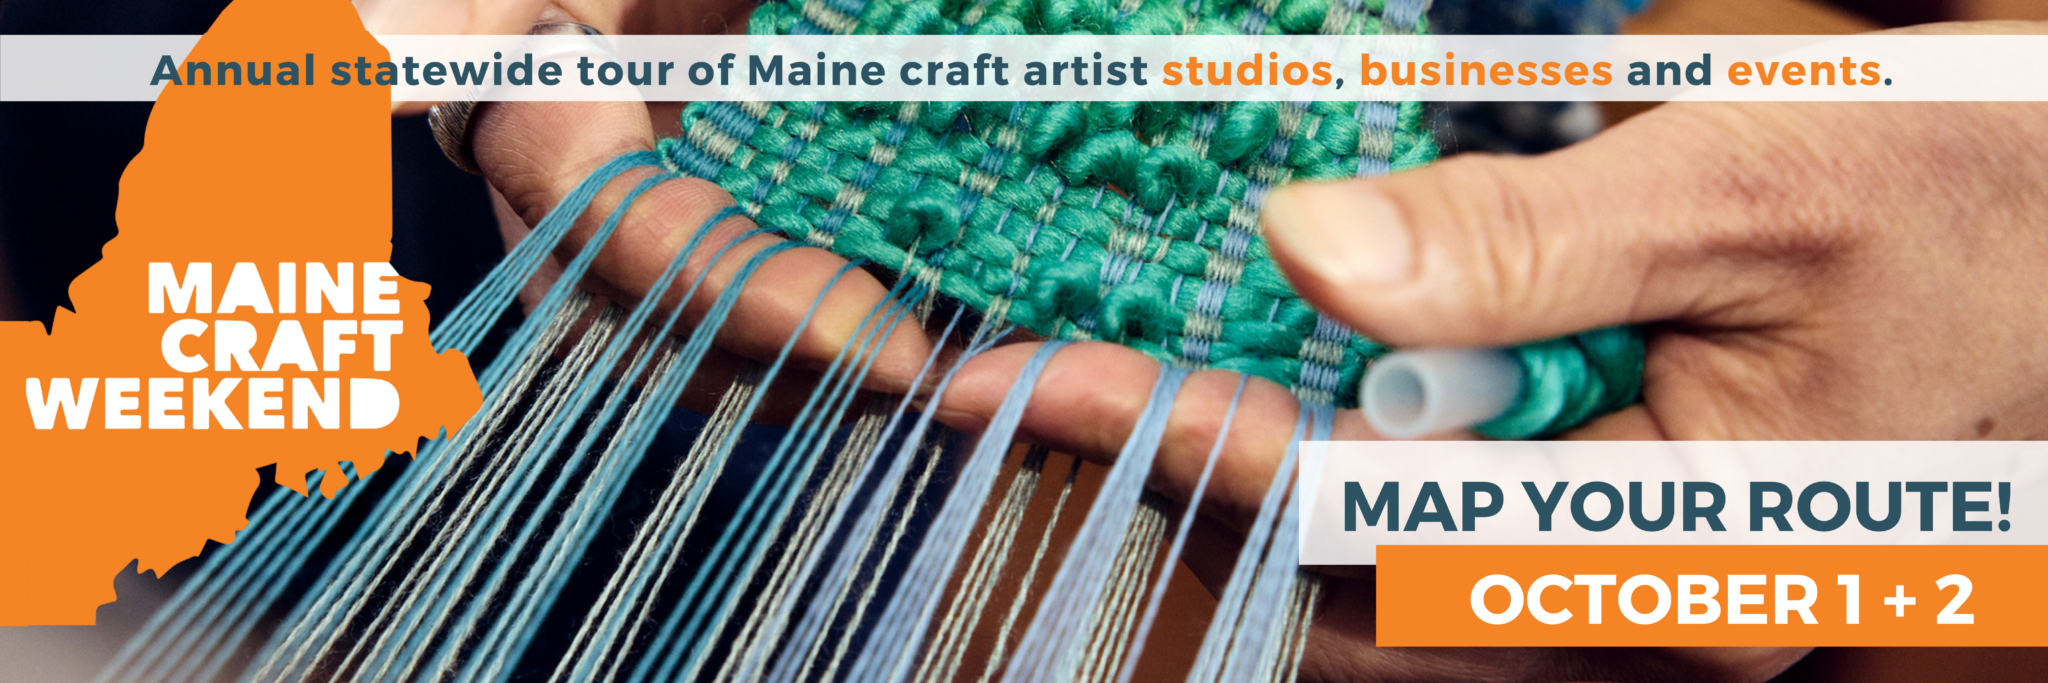 Maine Craft Weekend Statewide Tour of Maine Craft Studios, Breweries